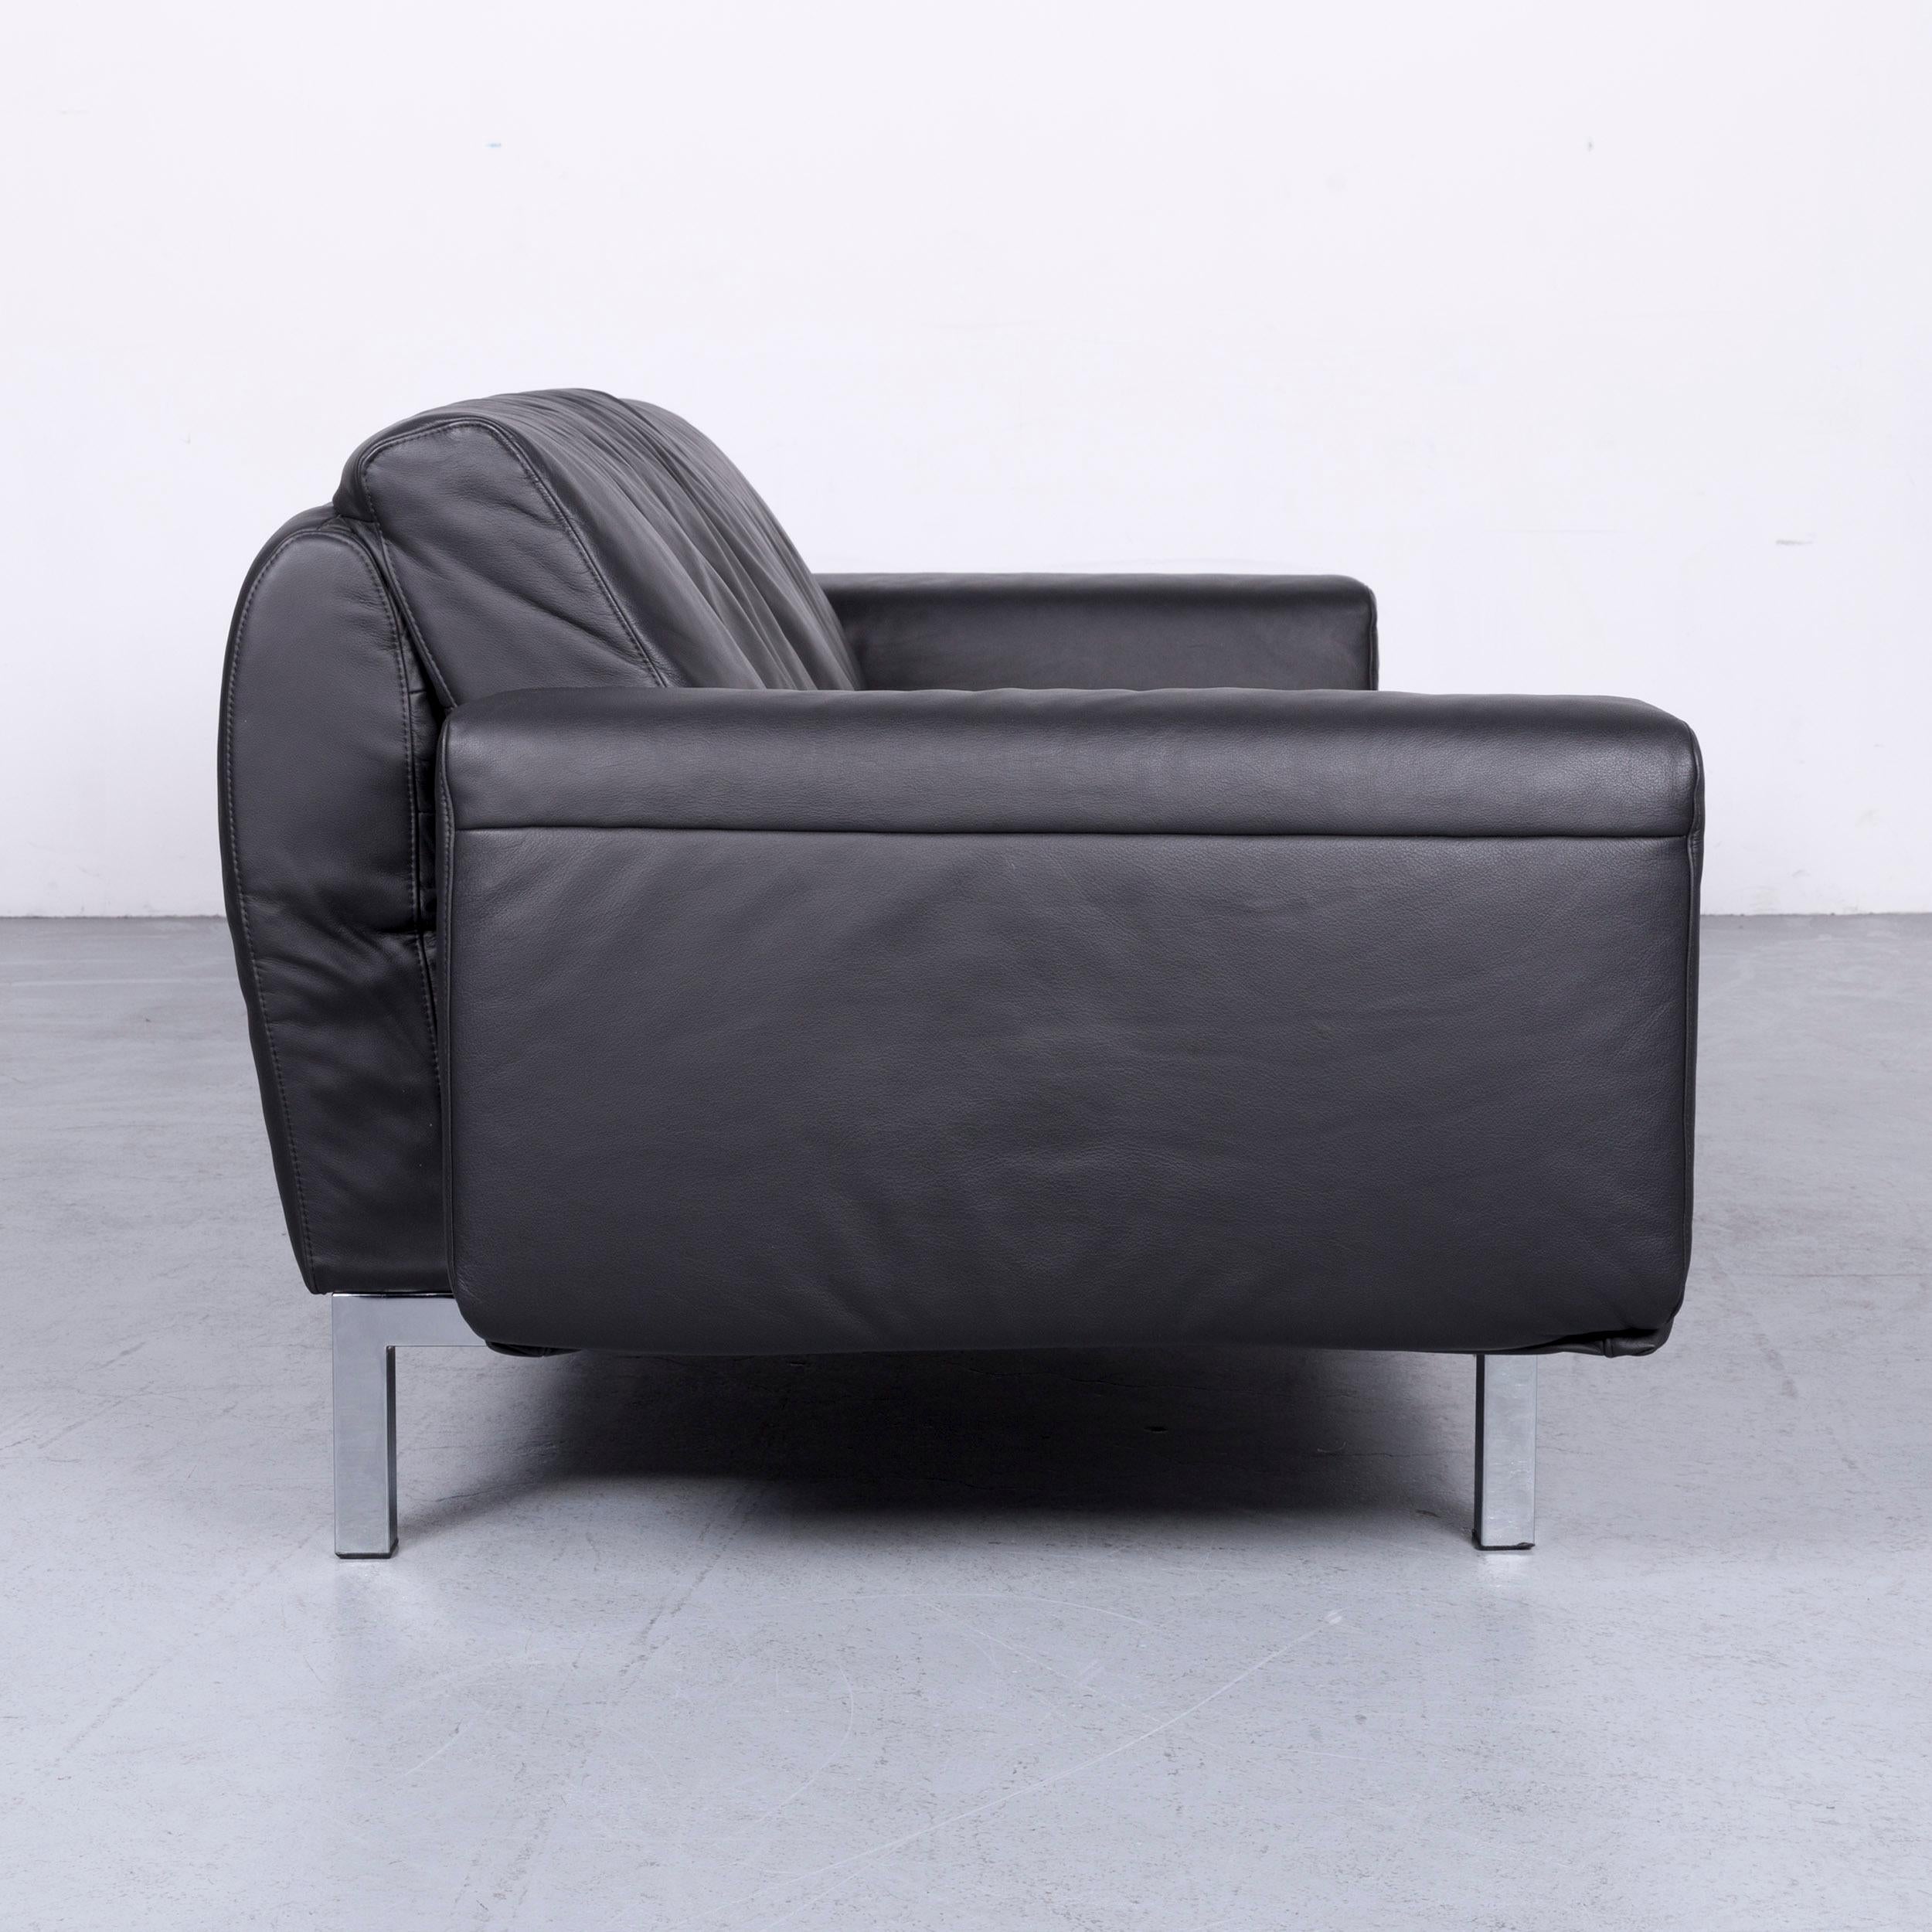 Mondo Relaxa Designer Three-Seat Sofa Leather Black Function Couch 7